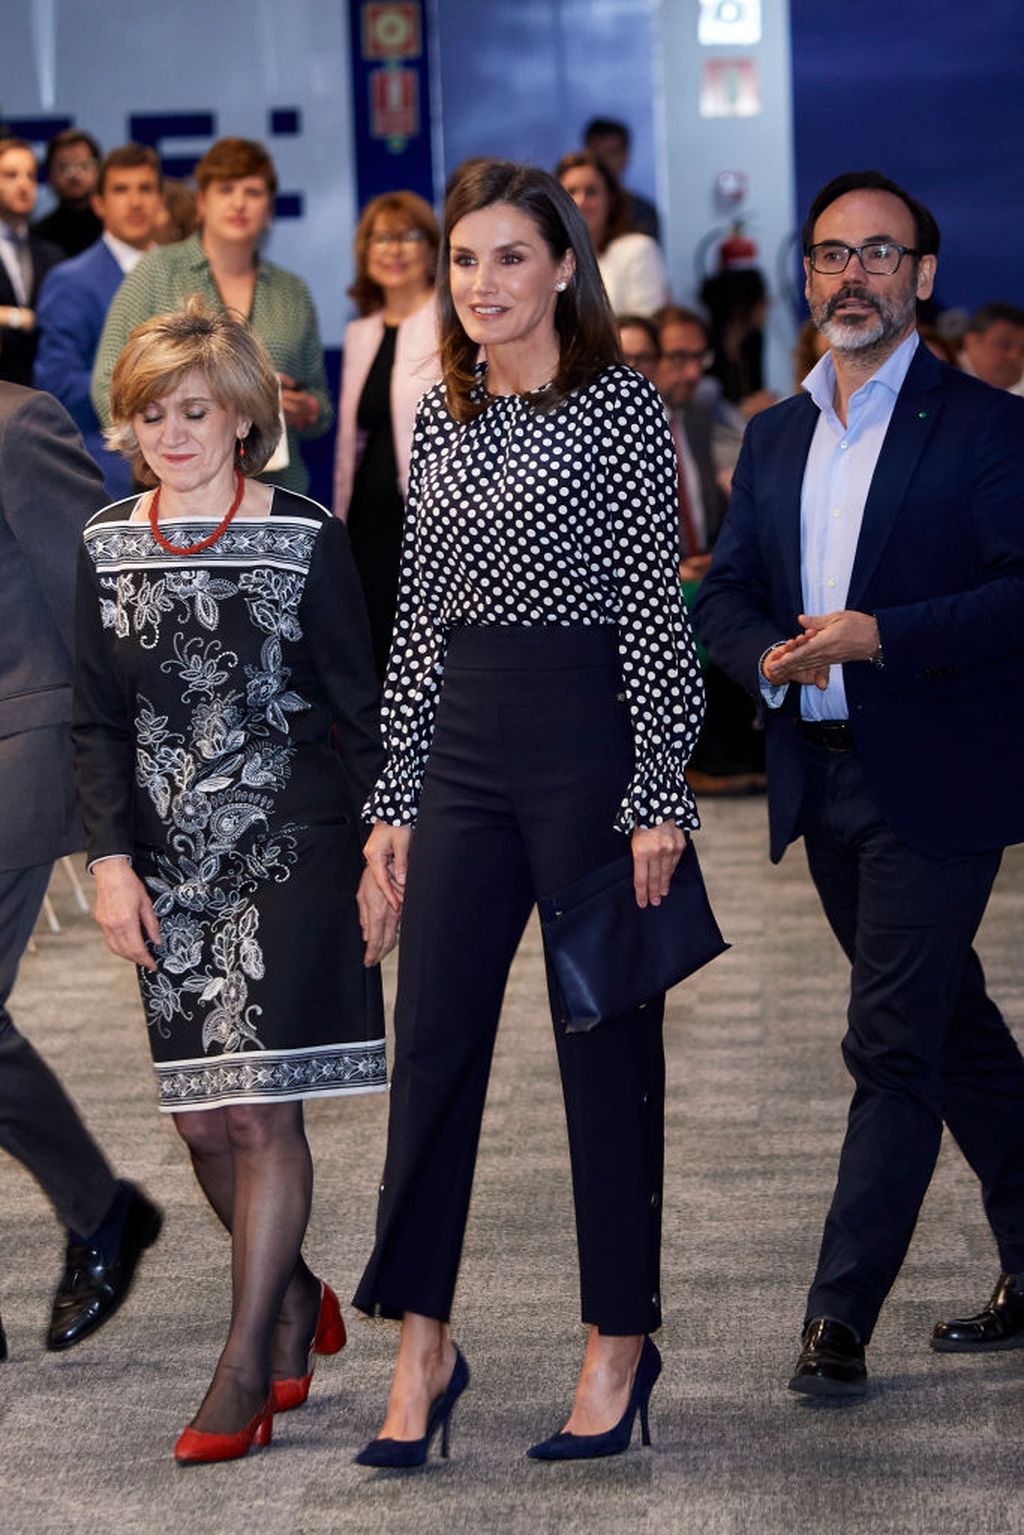 Kraljica Letizia u travnju 2019. godine prilikom posjeta španjolskoj novinskoj agenciji